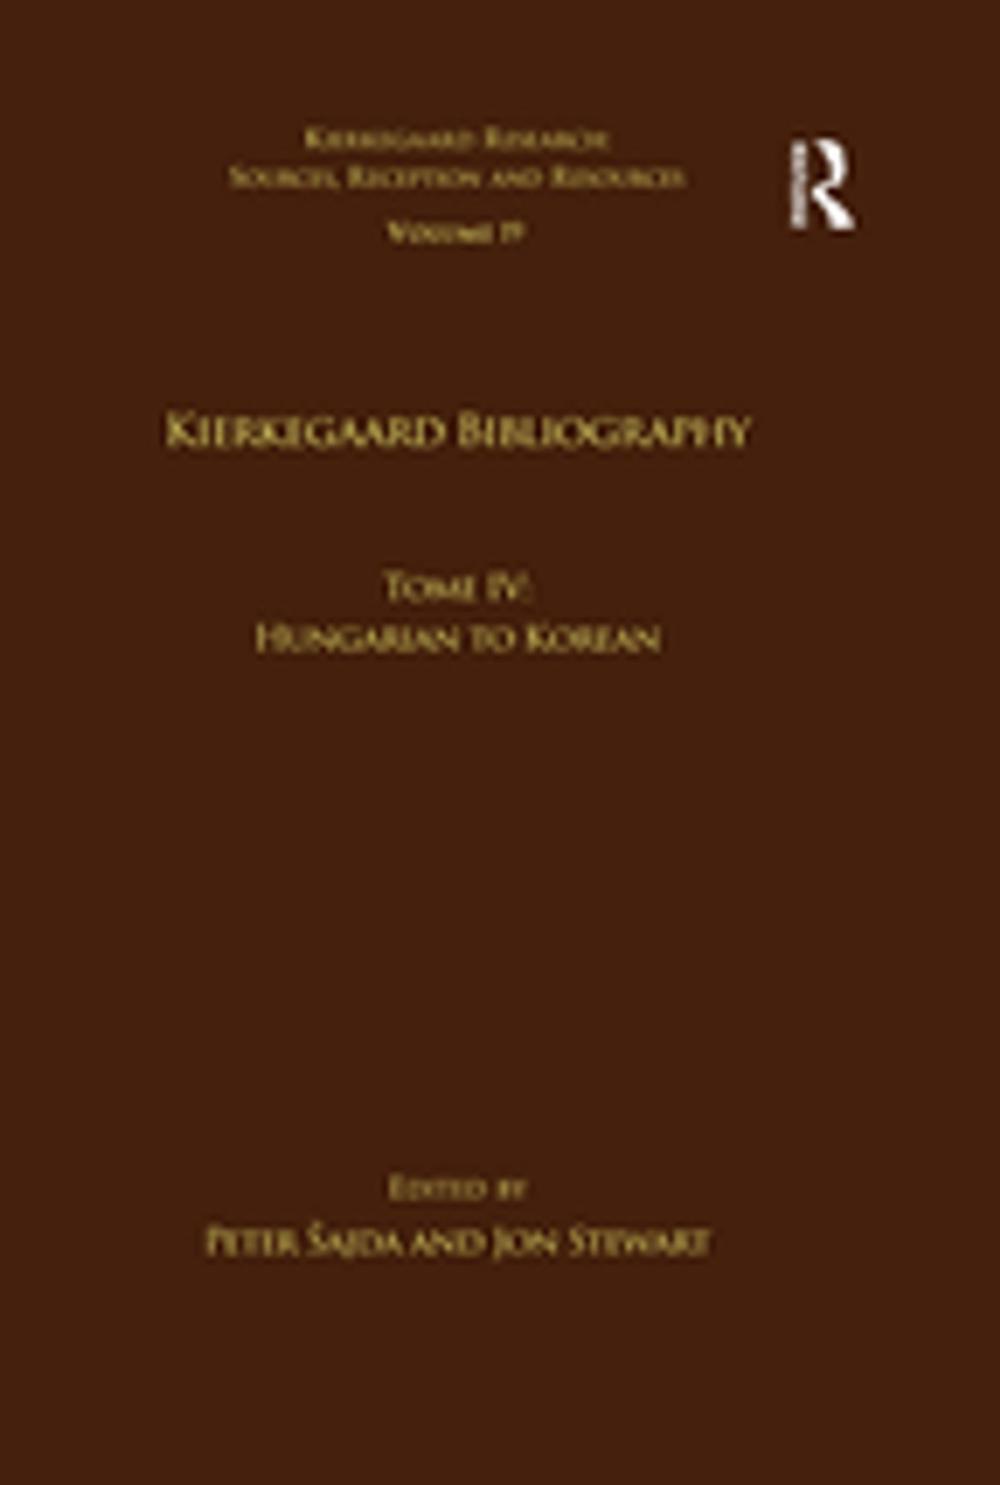 Big bigCover of Volume 19, Tome IV: Kierkegaard Bibliography